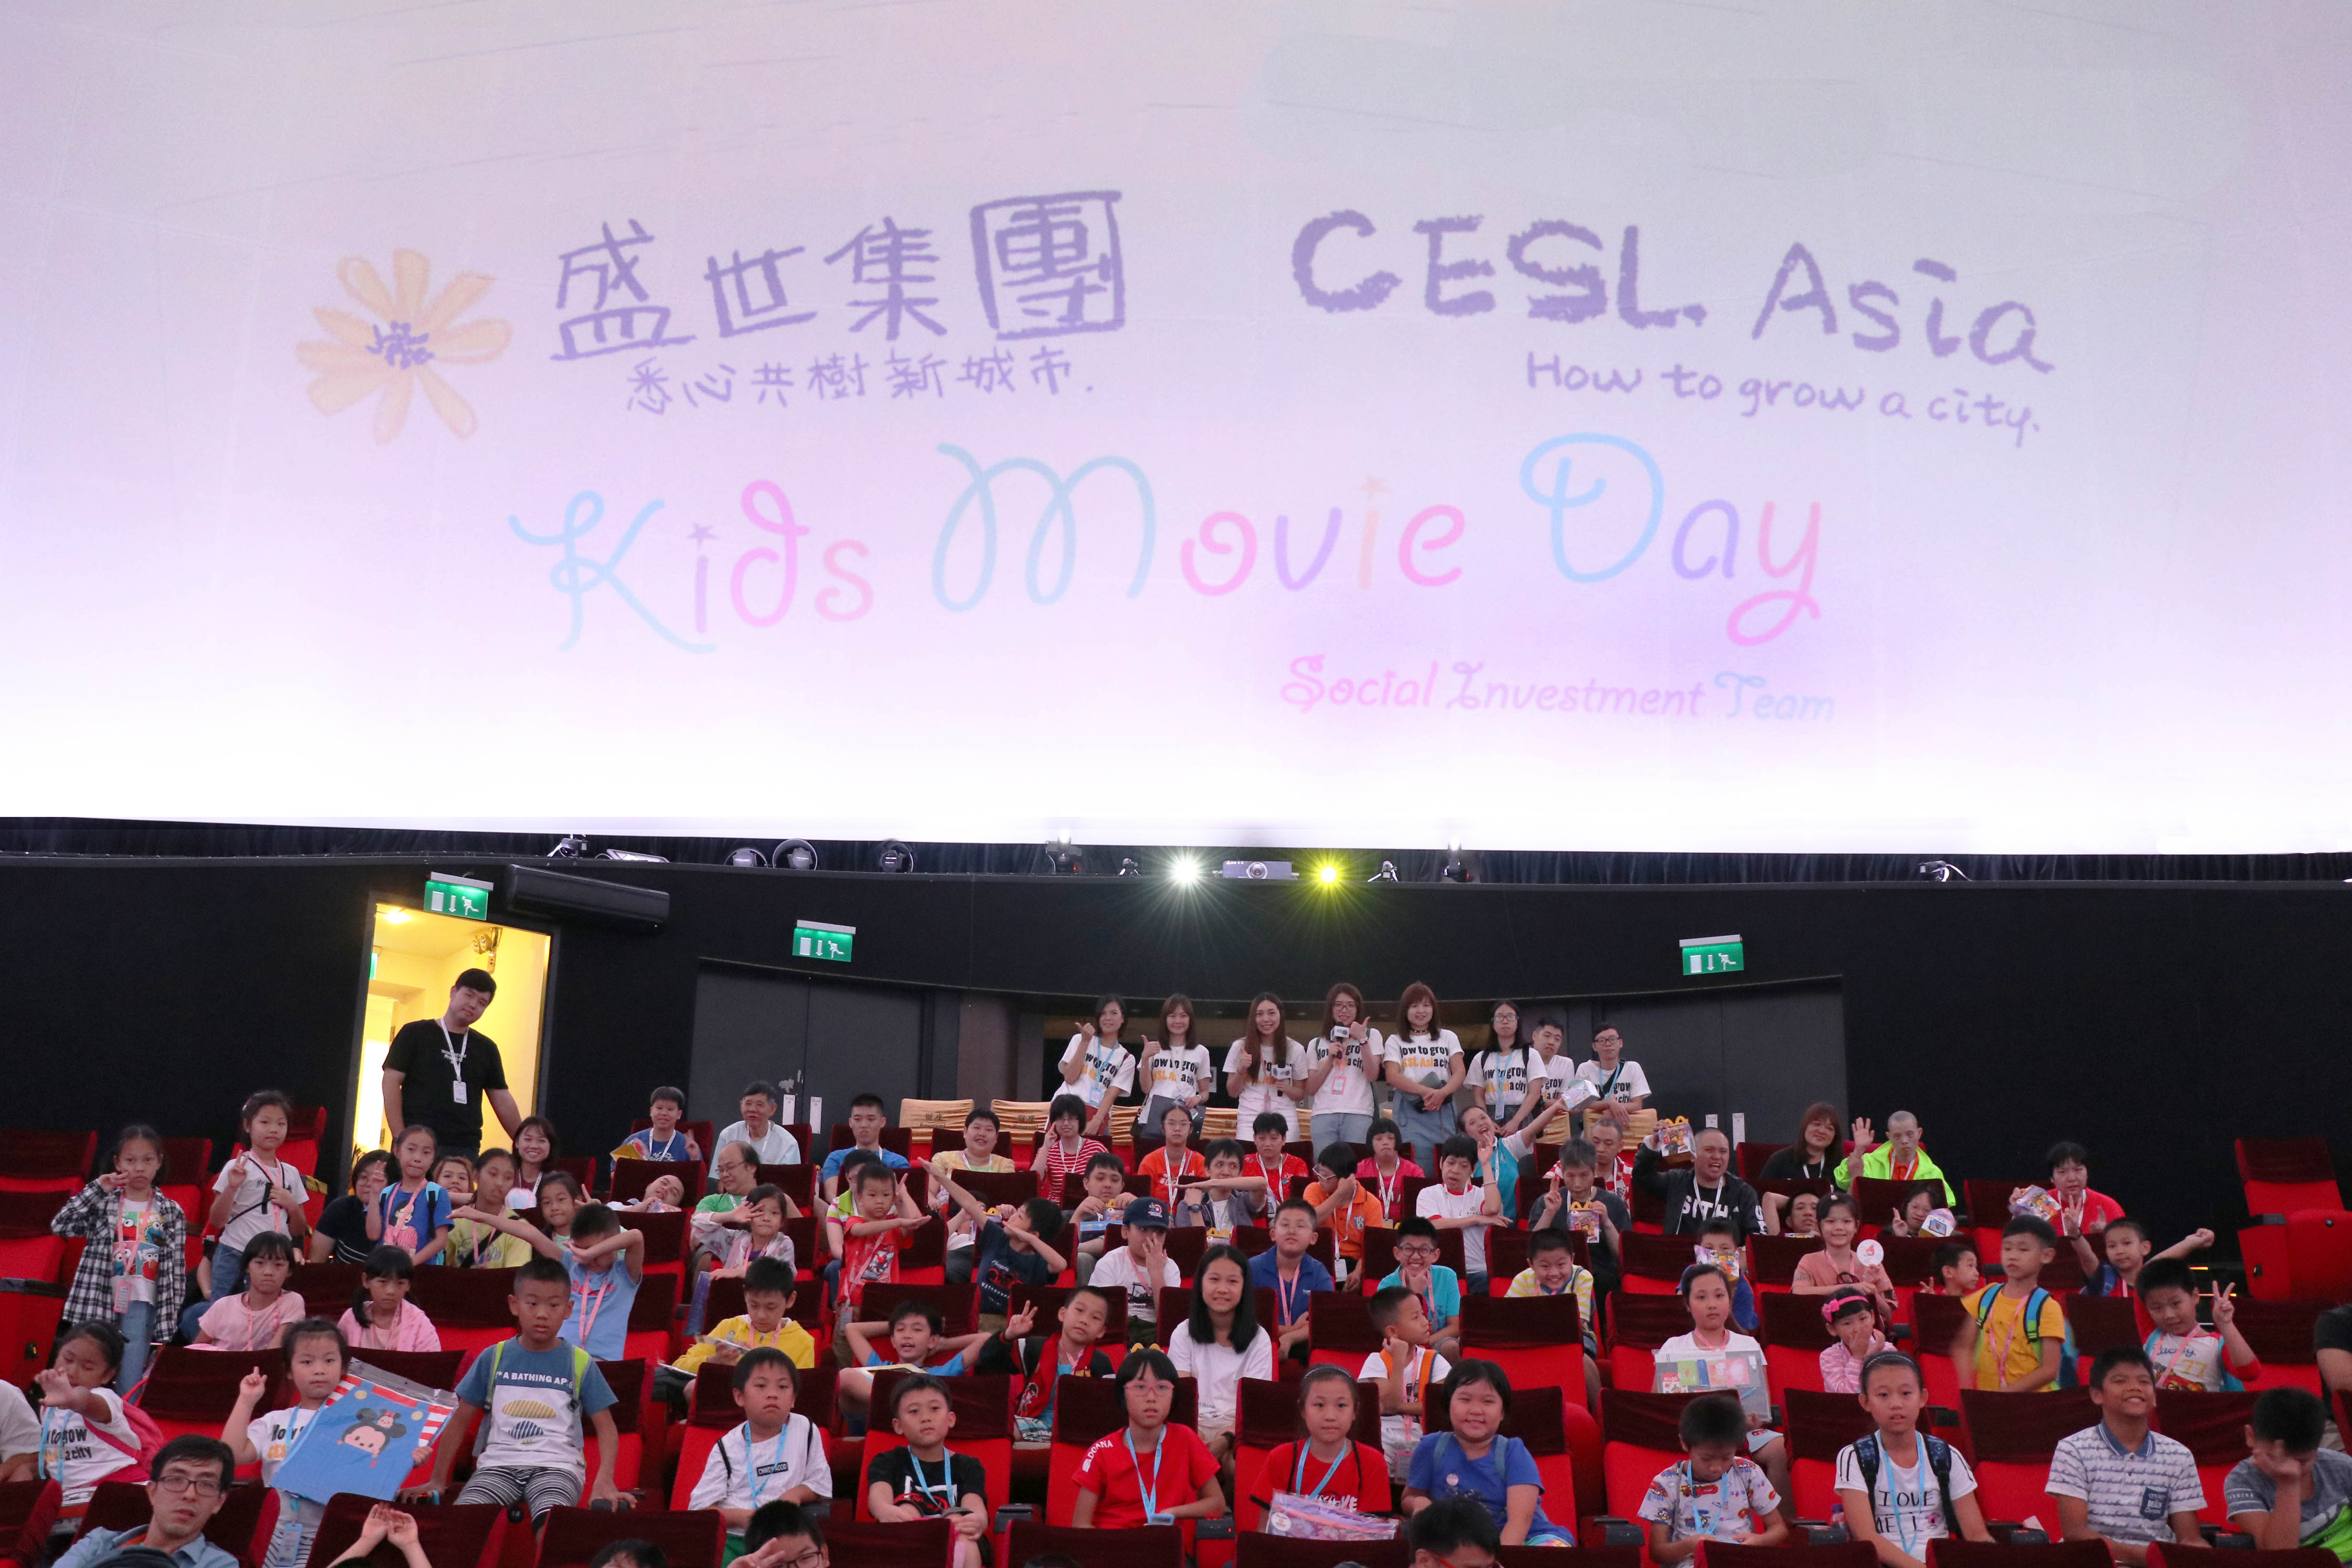 CESL Asia Kids Movie Day 2019 (2019/8/28)